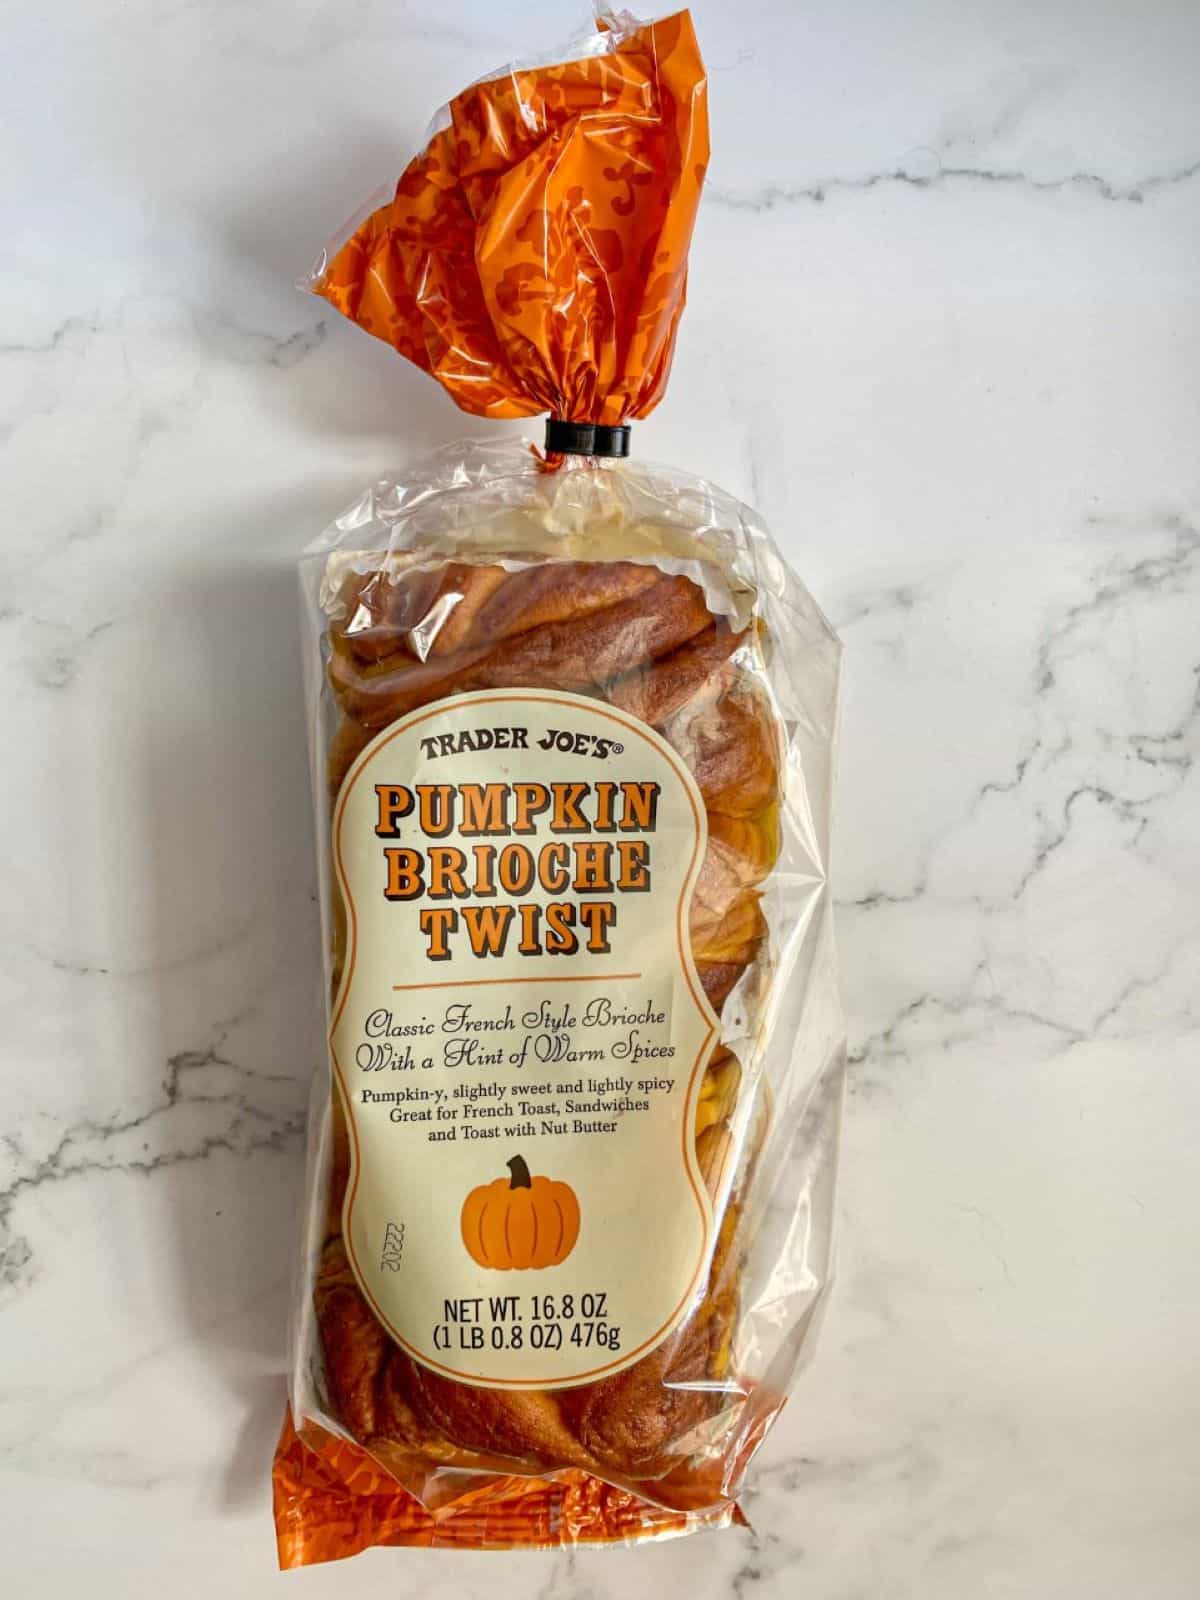 A loaf of Trader Joe's Pumpkin Brioche Twist bread is an a marble table.